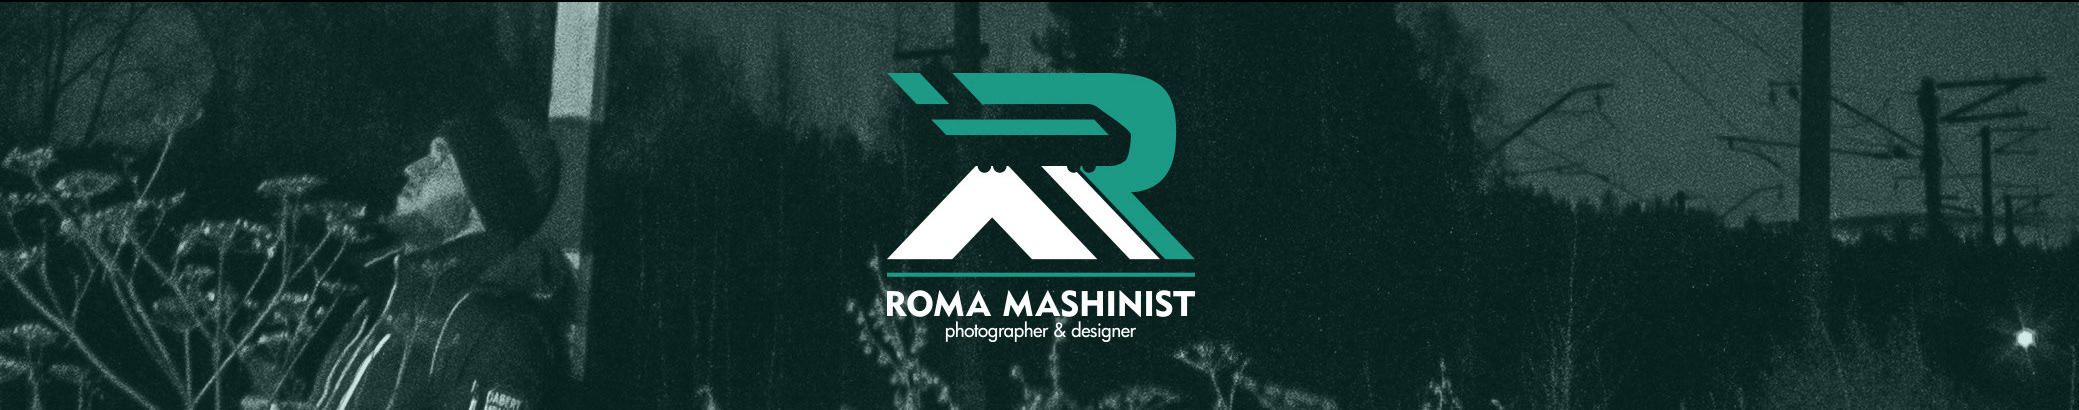 Баннер профиля Roma Mashinist